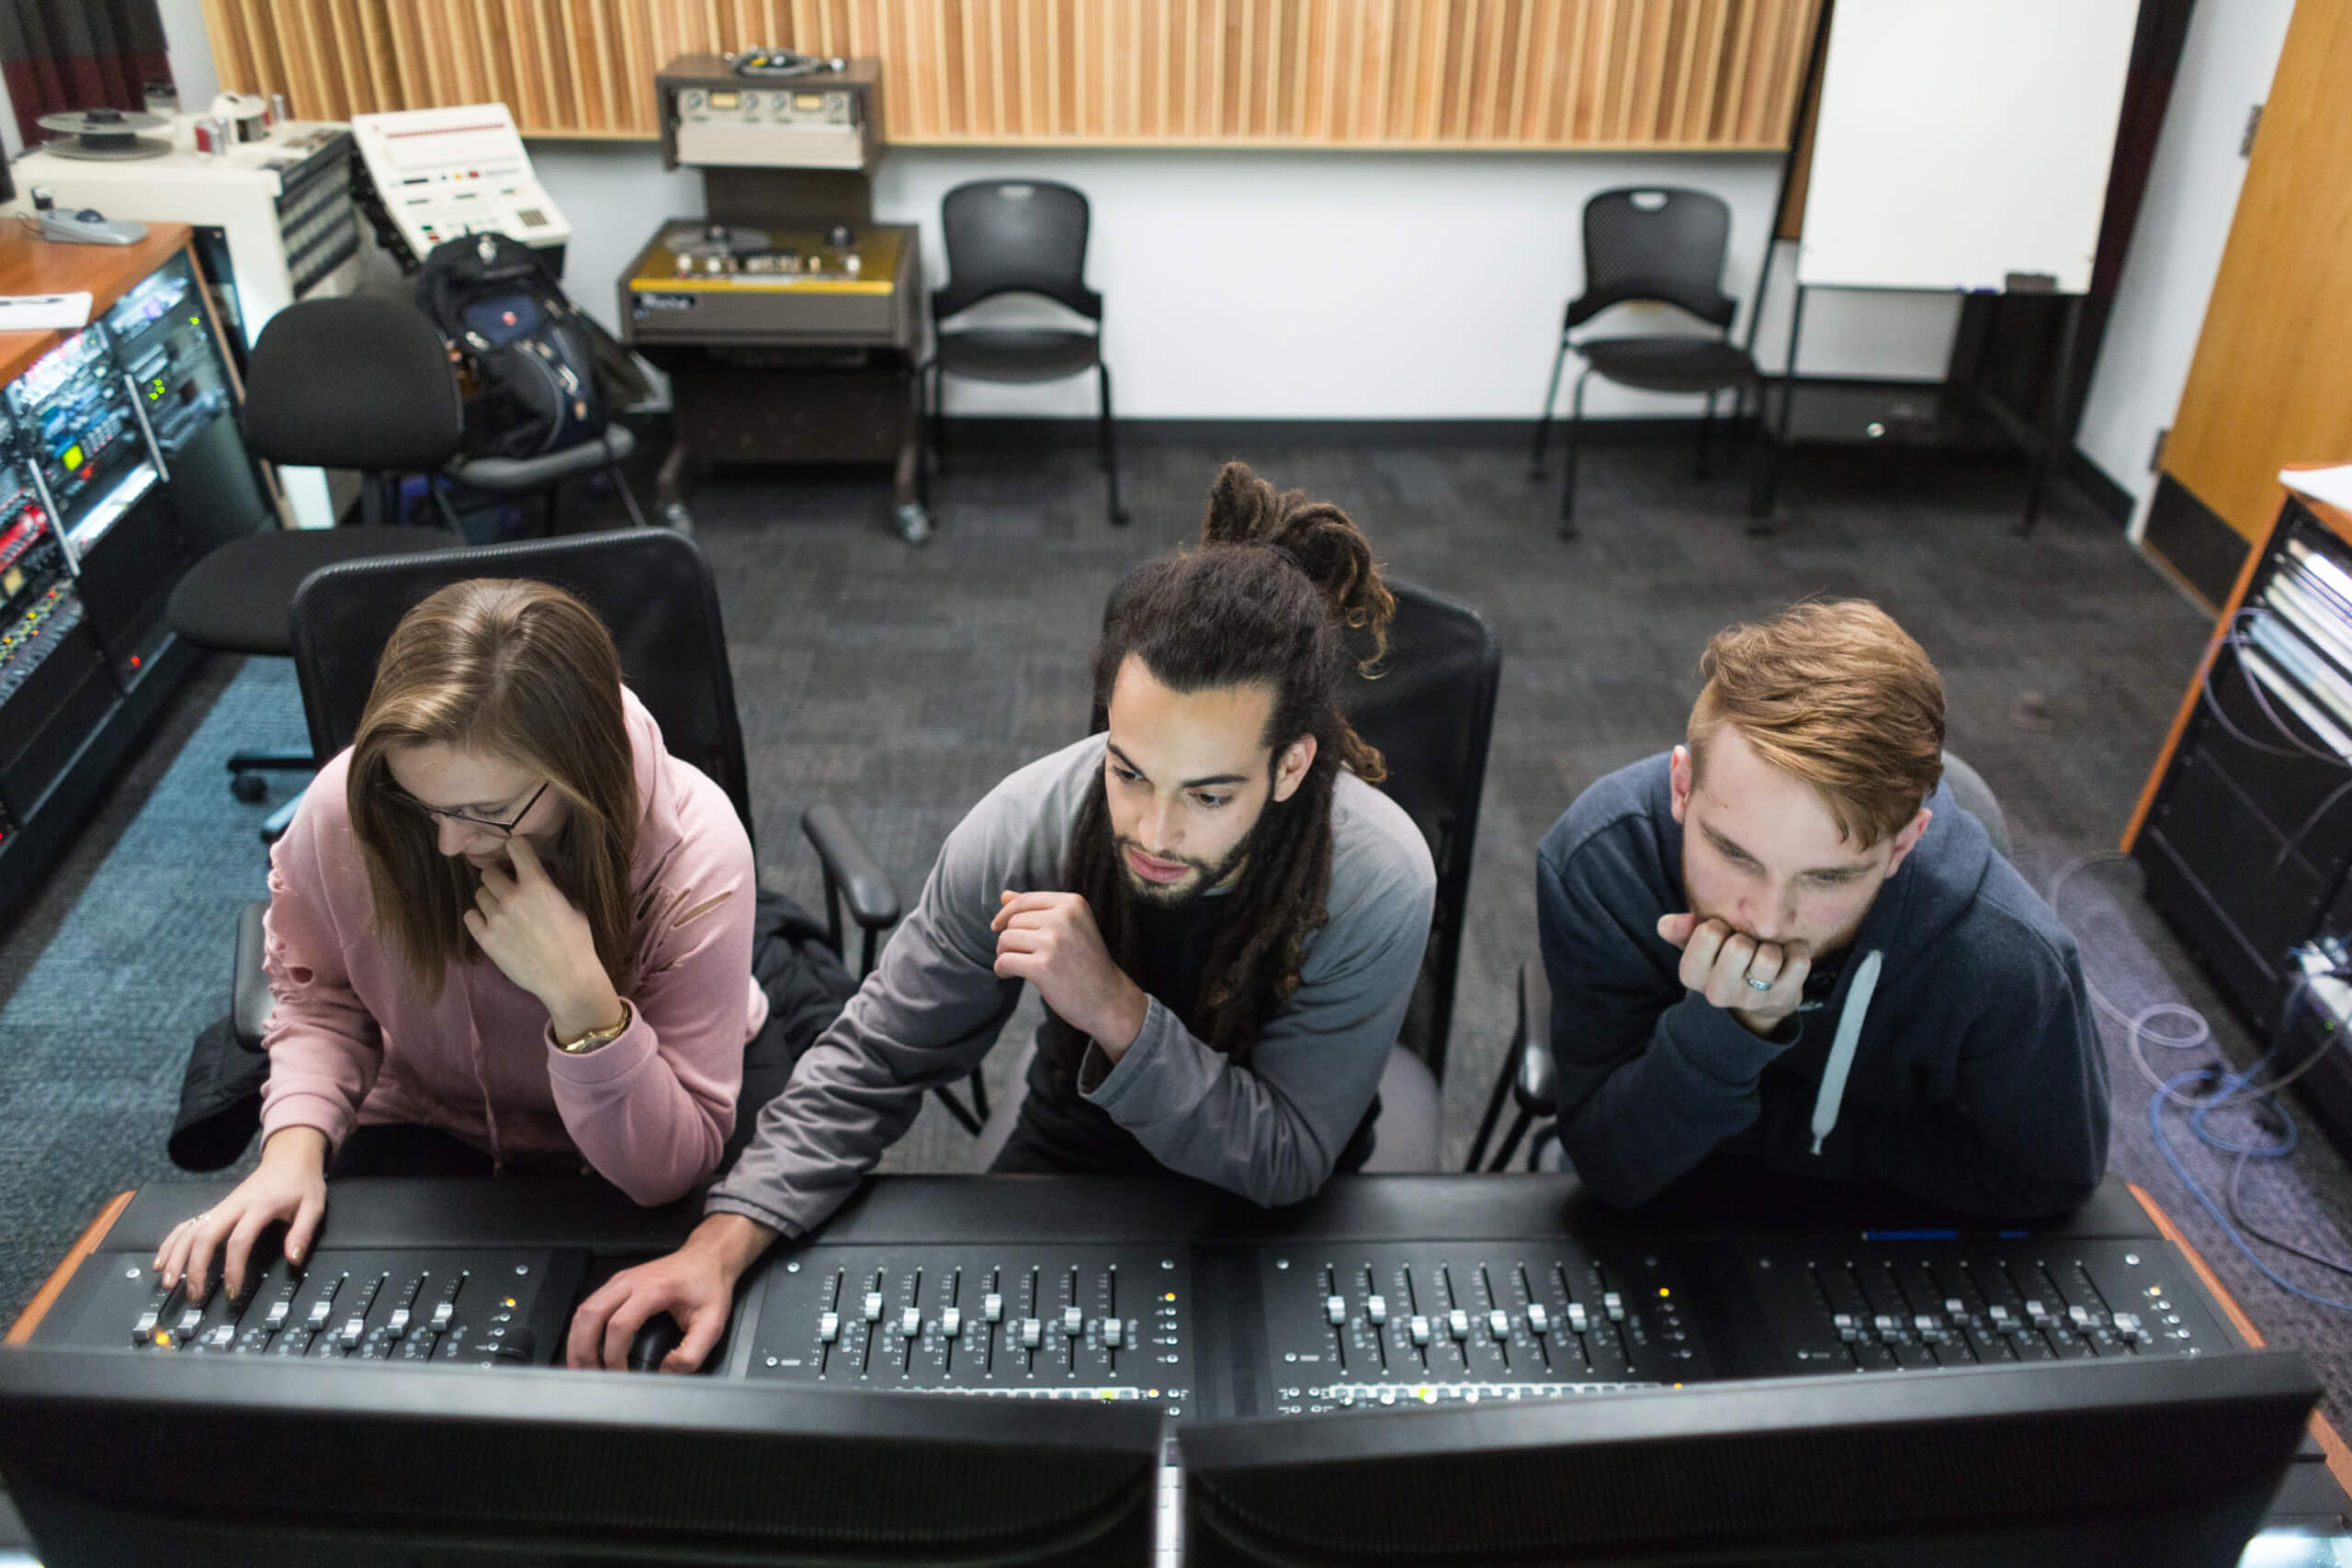 Alumni in the music studio, The OU studio consists of a mai…